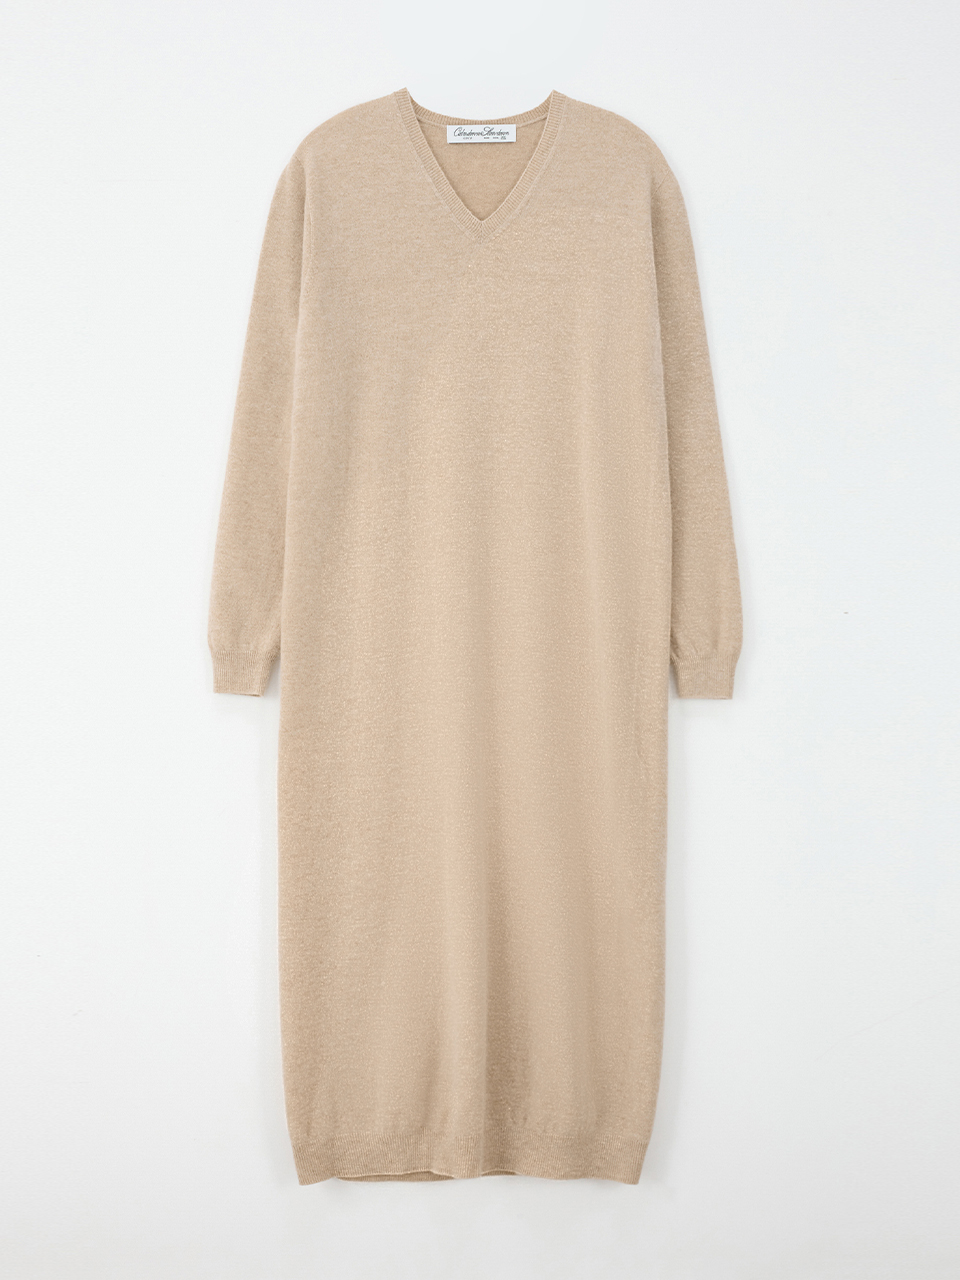 Wool cashmere v-neck dress_oatmeal beige